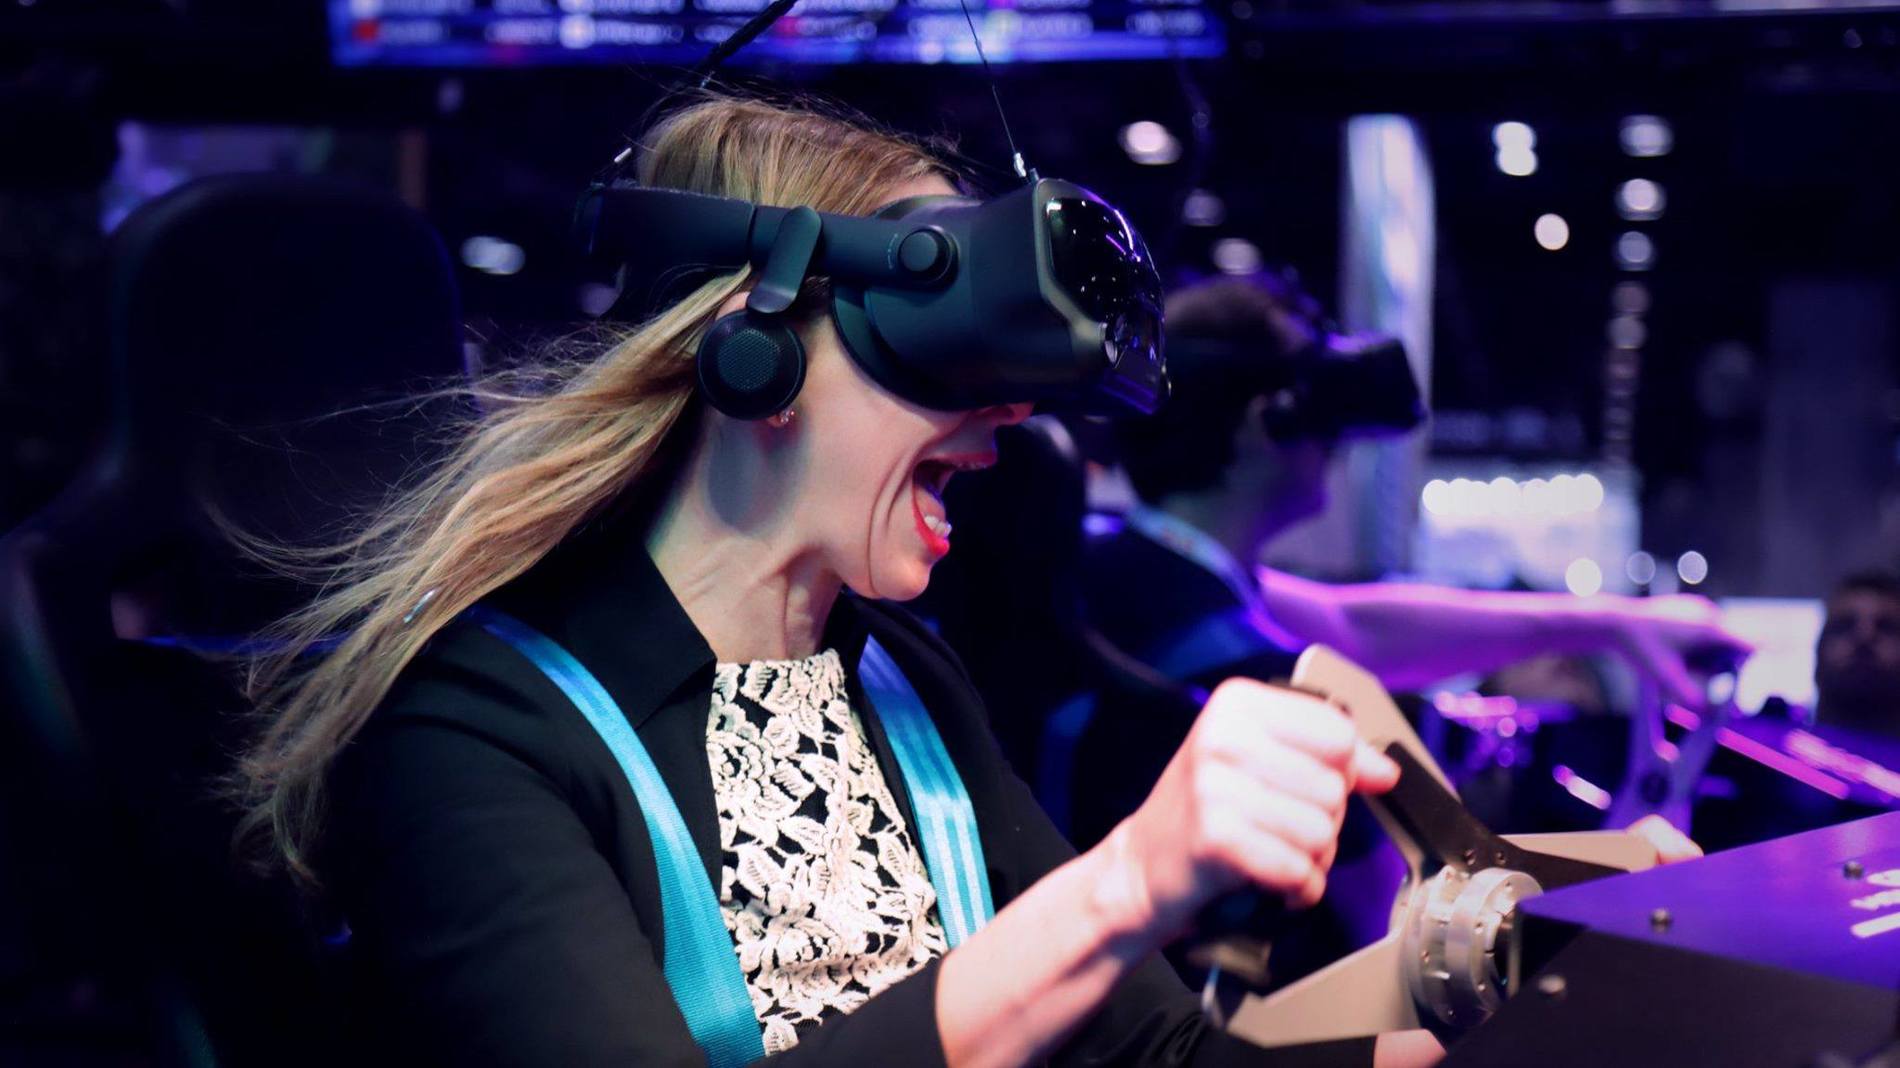 The Ultimate Virtual Reality Motion Simulator!